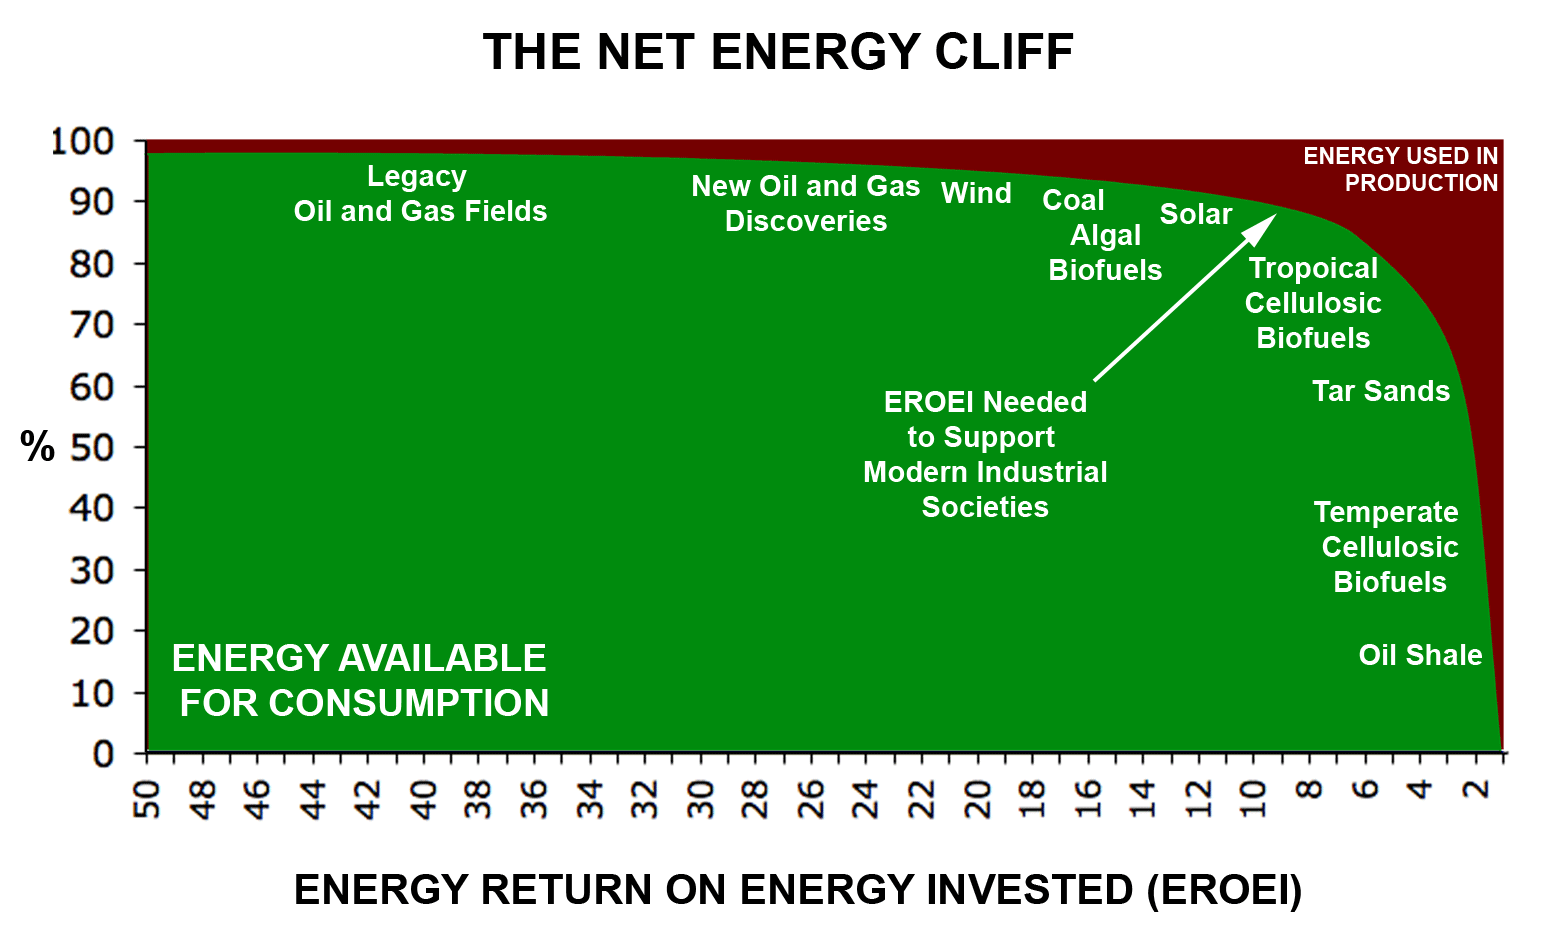 http://deepresource.files.wordpress.com/2012/11/net_energy_cliff.gif